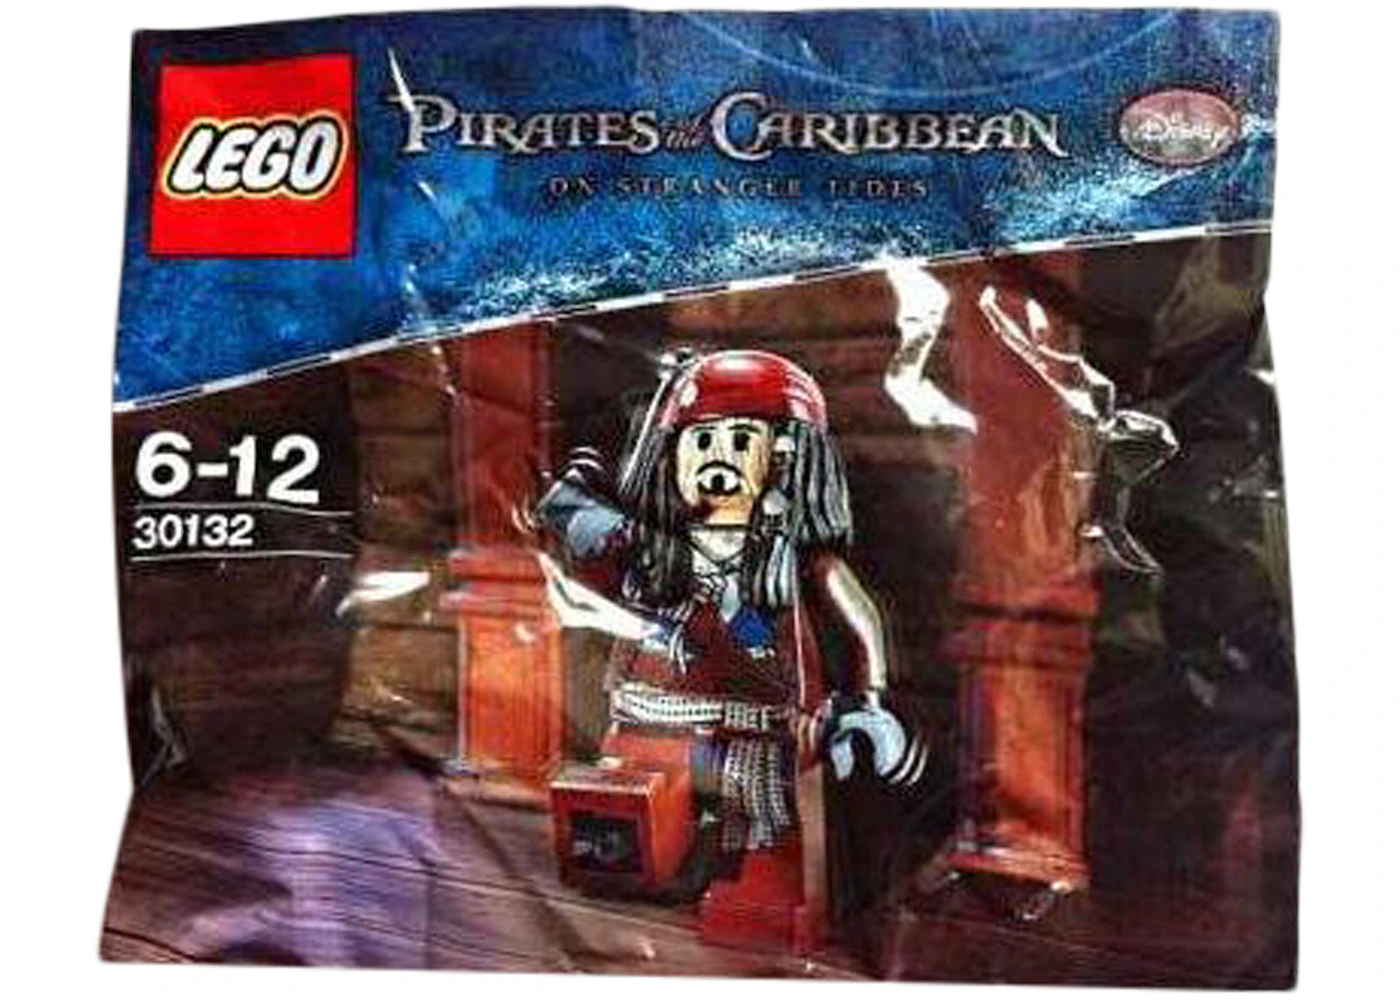 Framework Ledig egoisme LEGO Pirates of the Caribbean Voodoo Jack Sparrow Set 30132 - US